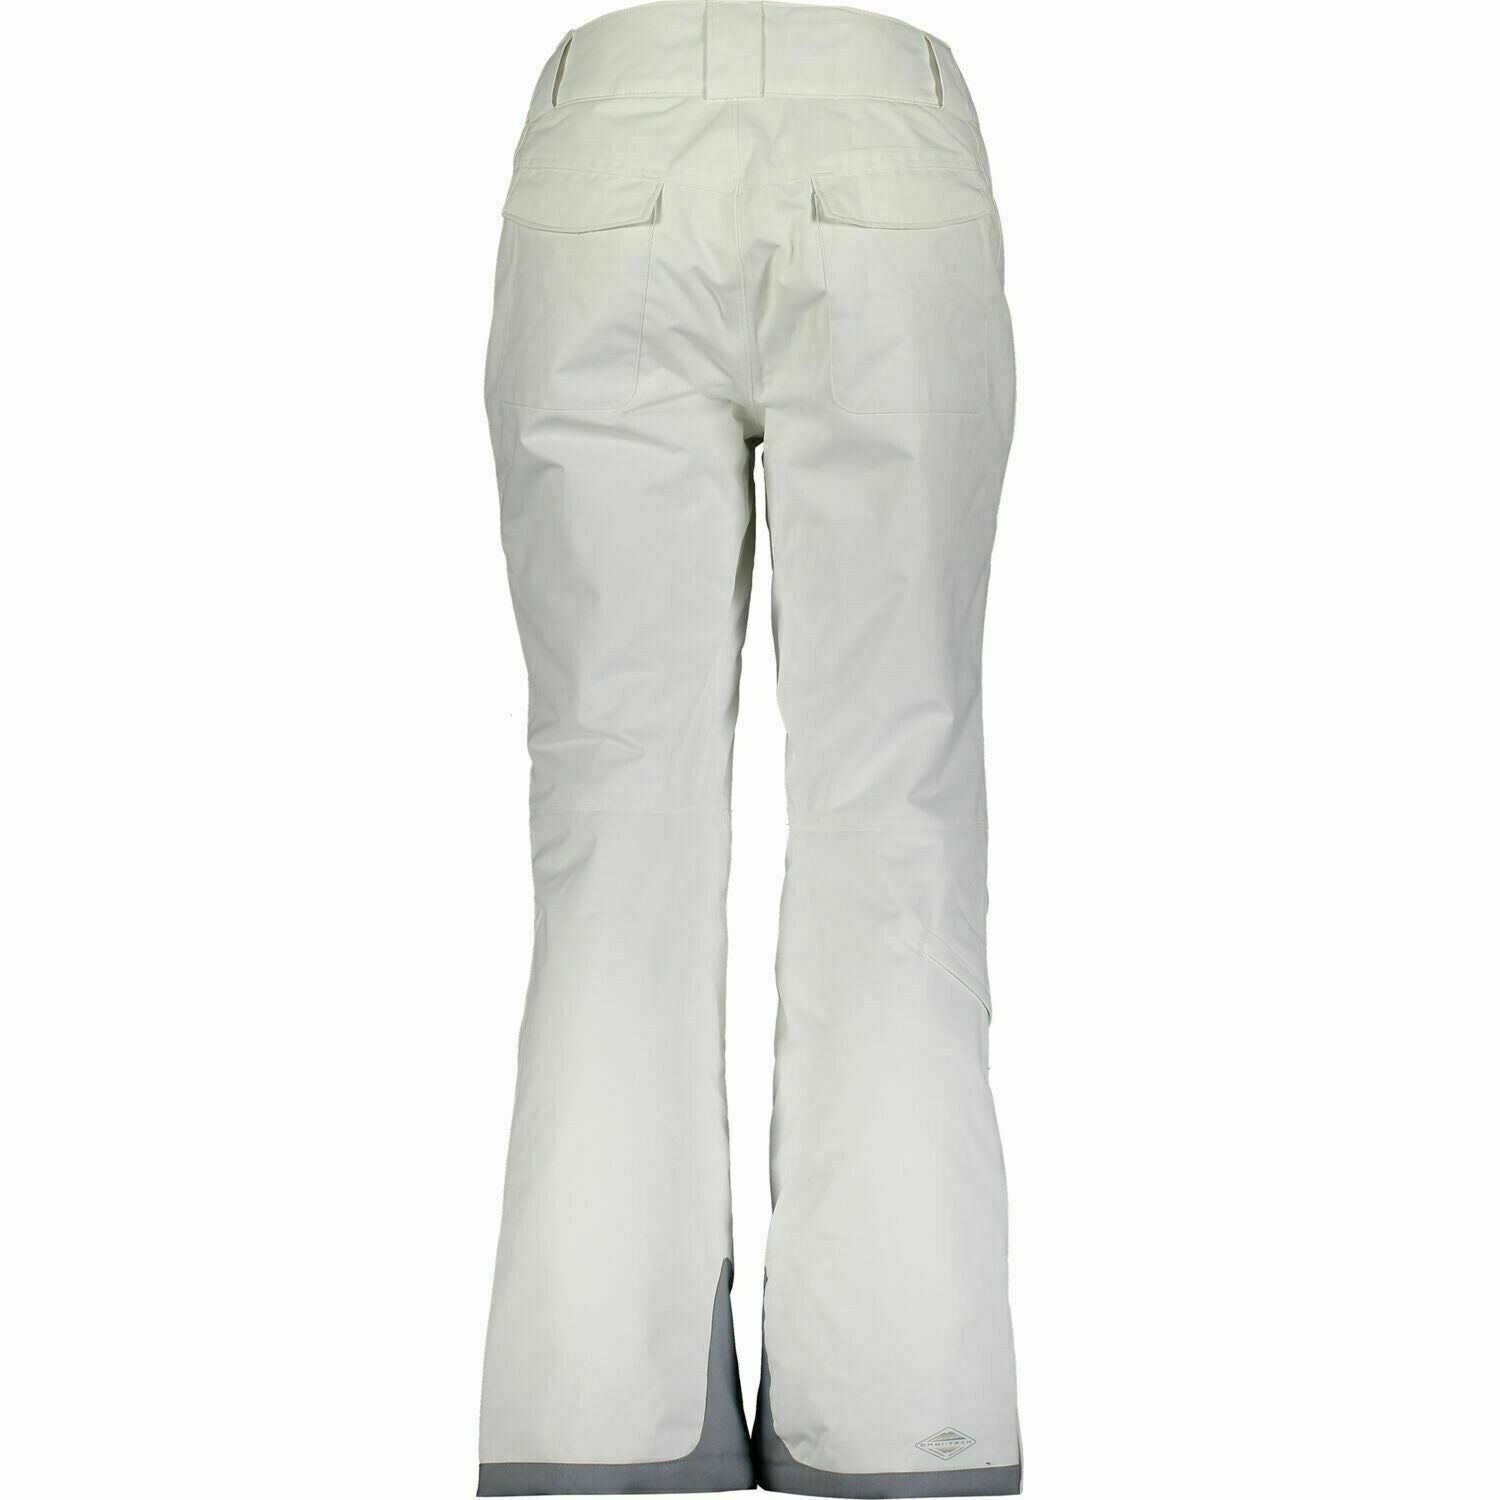 COLUMBIA Women's BUGABOO OH Ski Trousers Pants, White, size XL